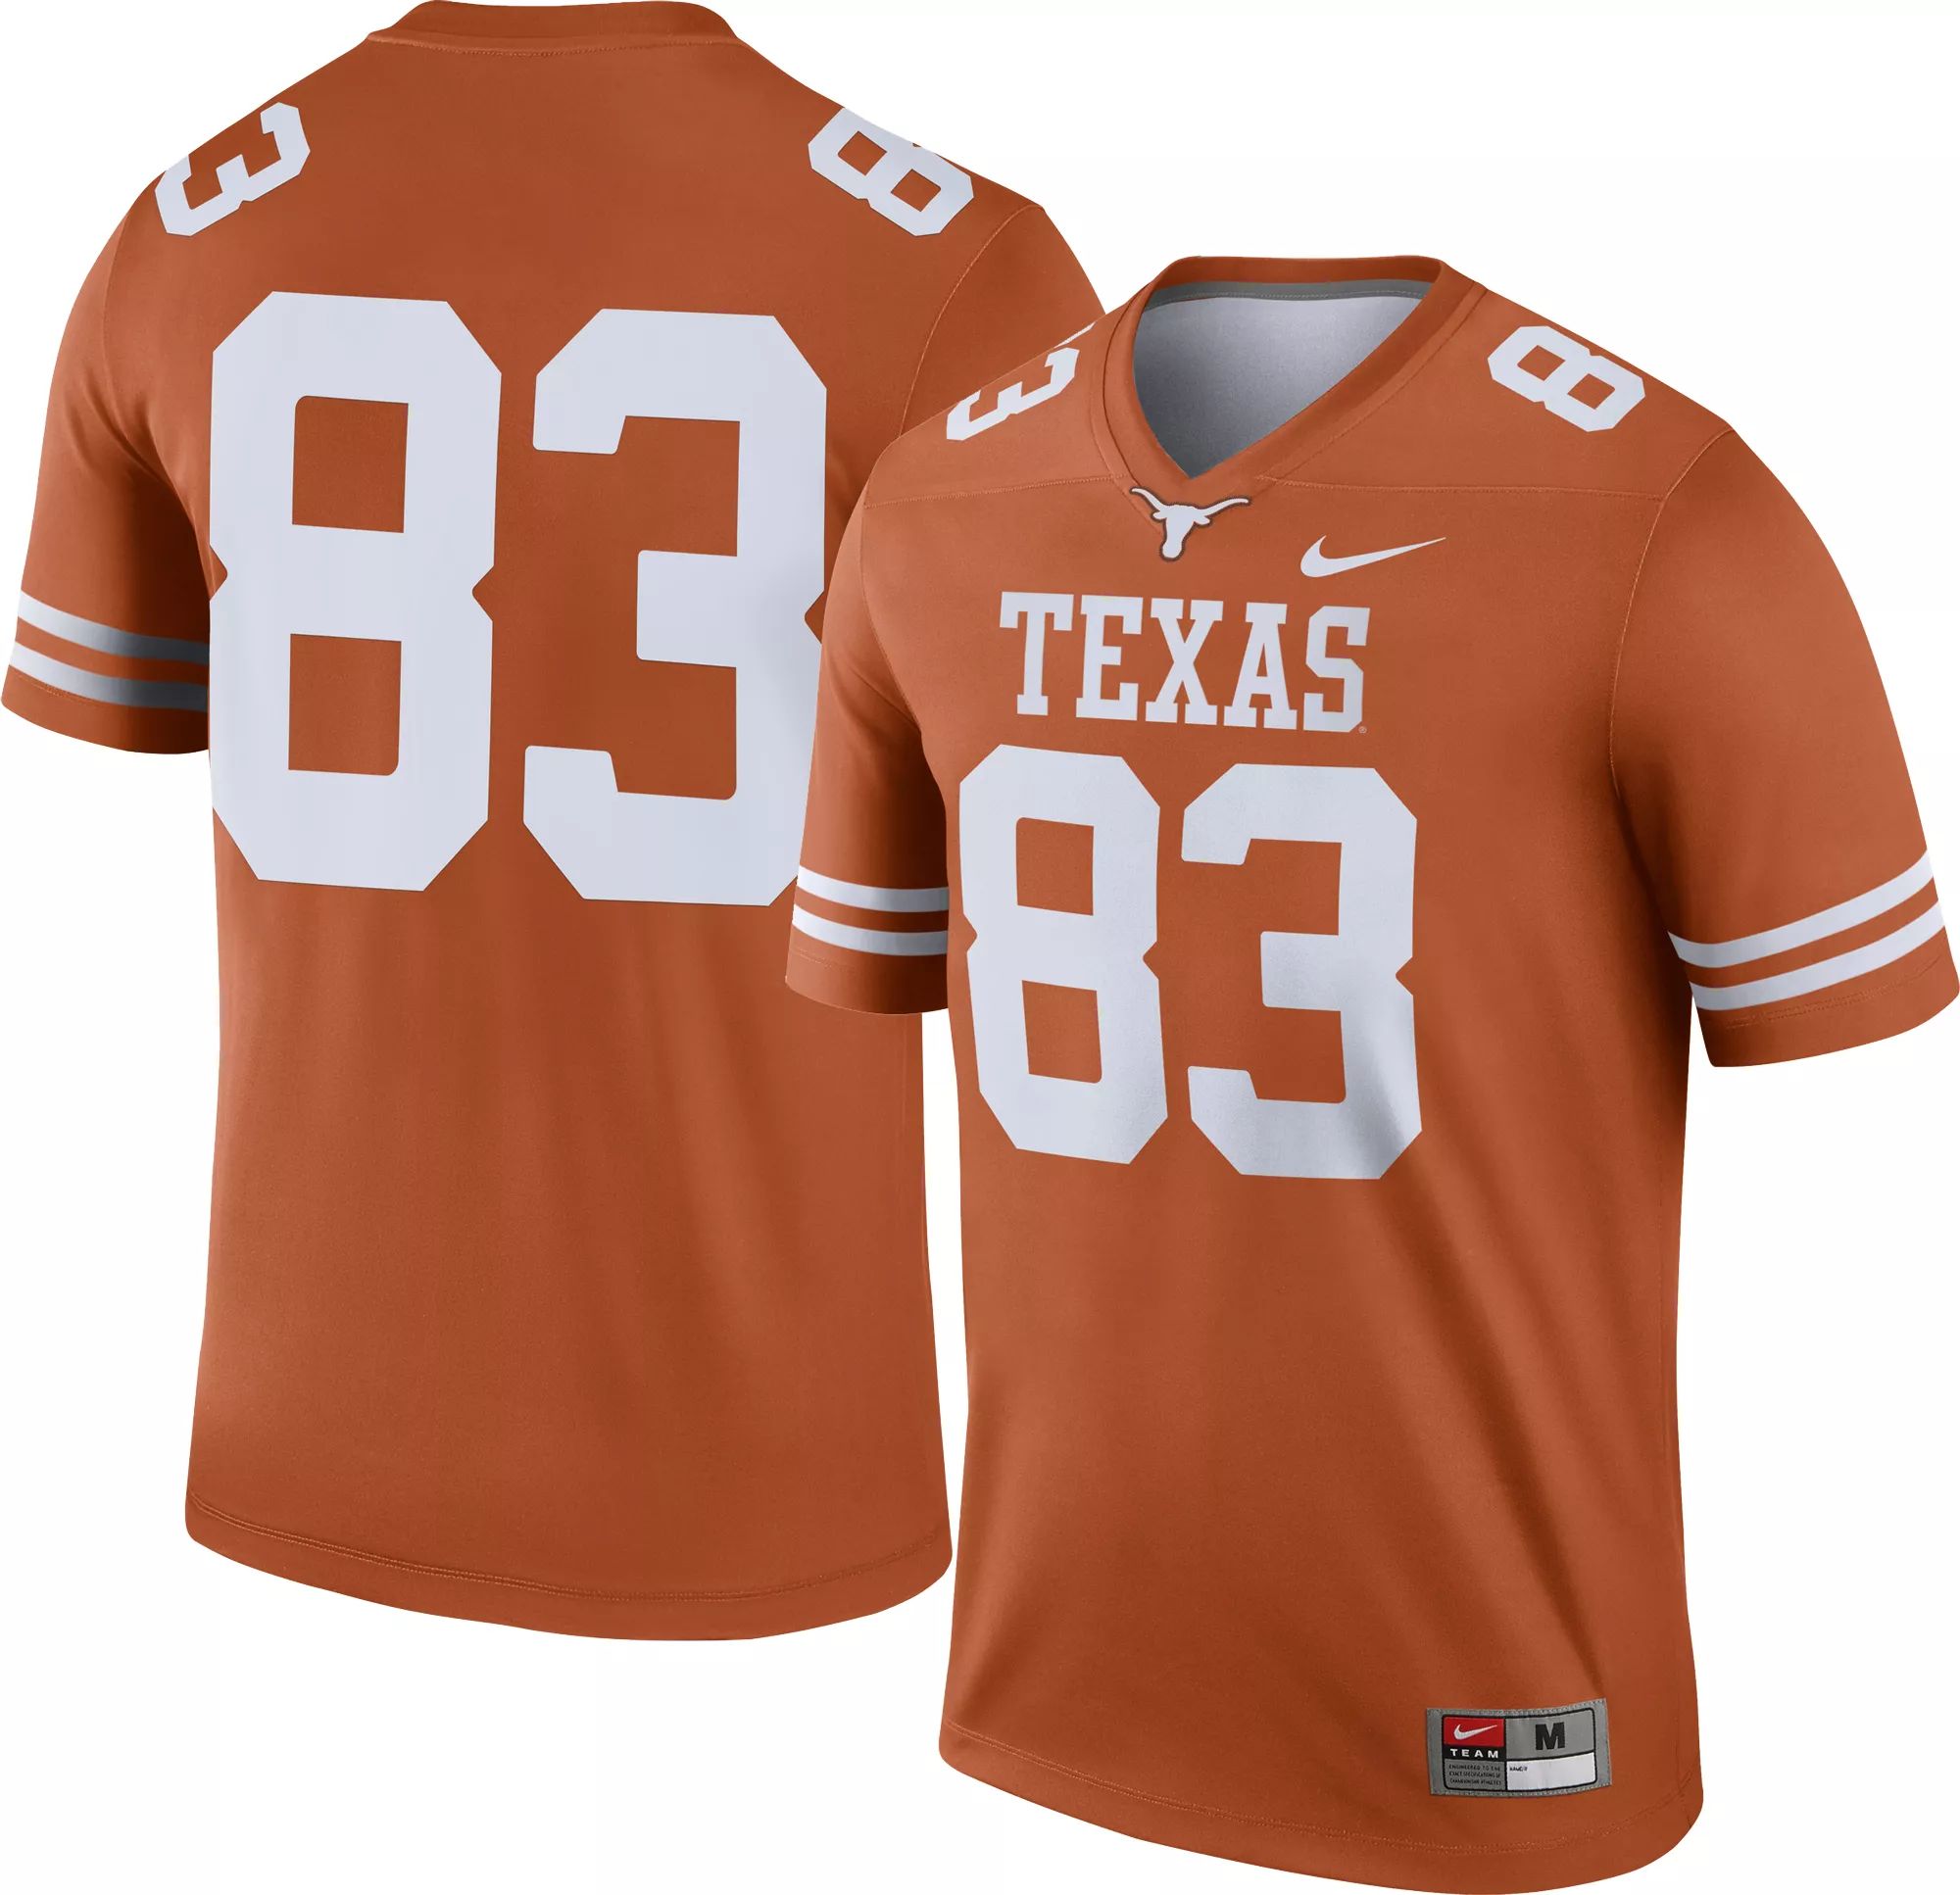 Nike Men's Texas Longhorns #83 Burnt Orange Dri-FIT Legend Football Jersey, Size: Small | Dick's Sporting Goods